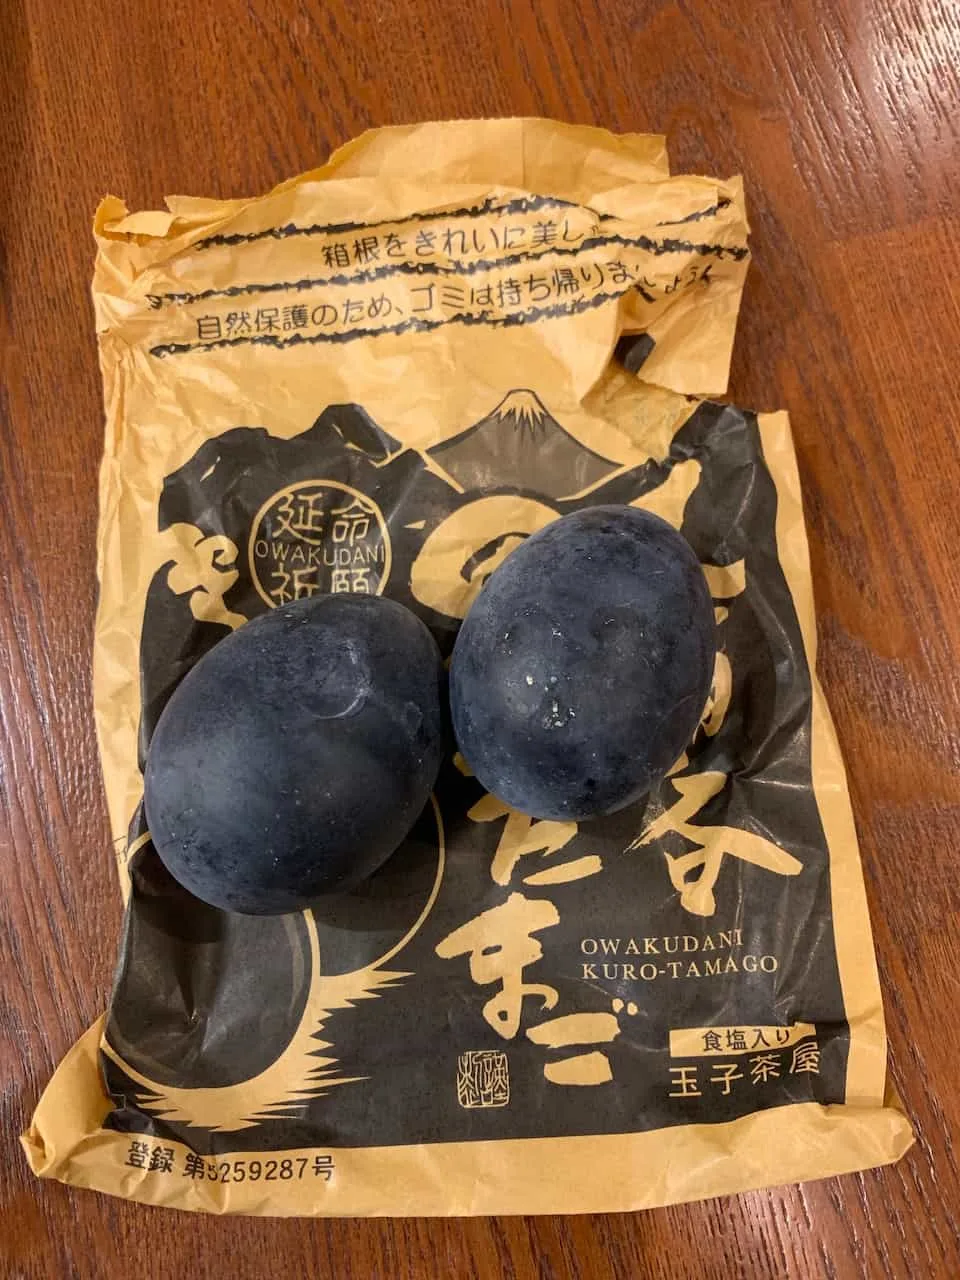 Black Eggs Owakudani